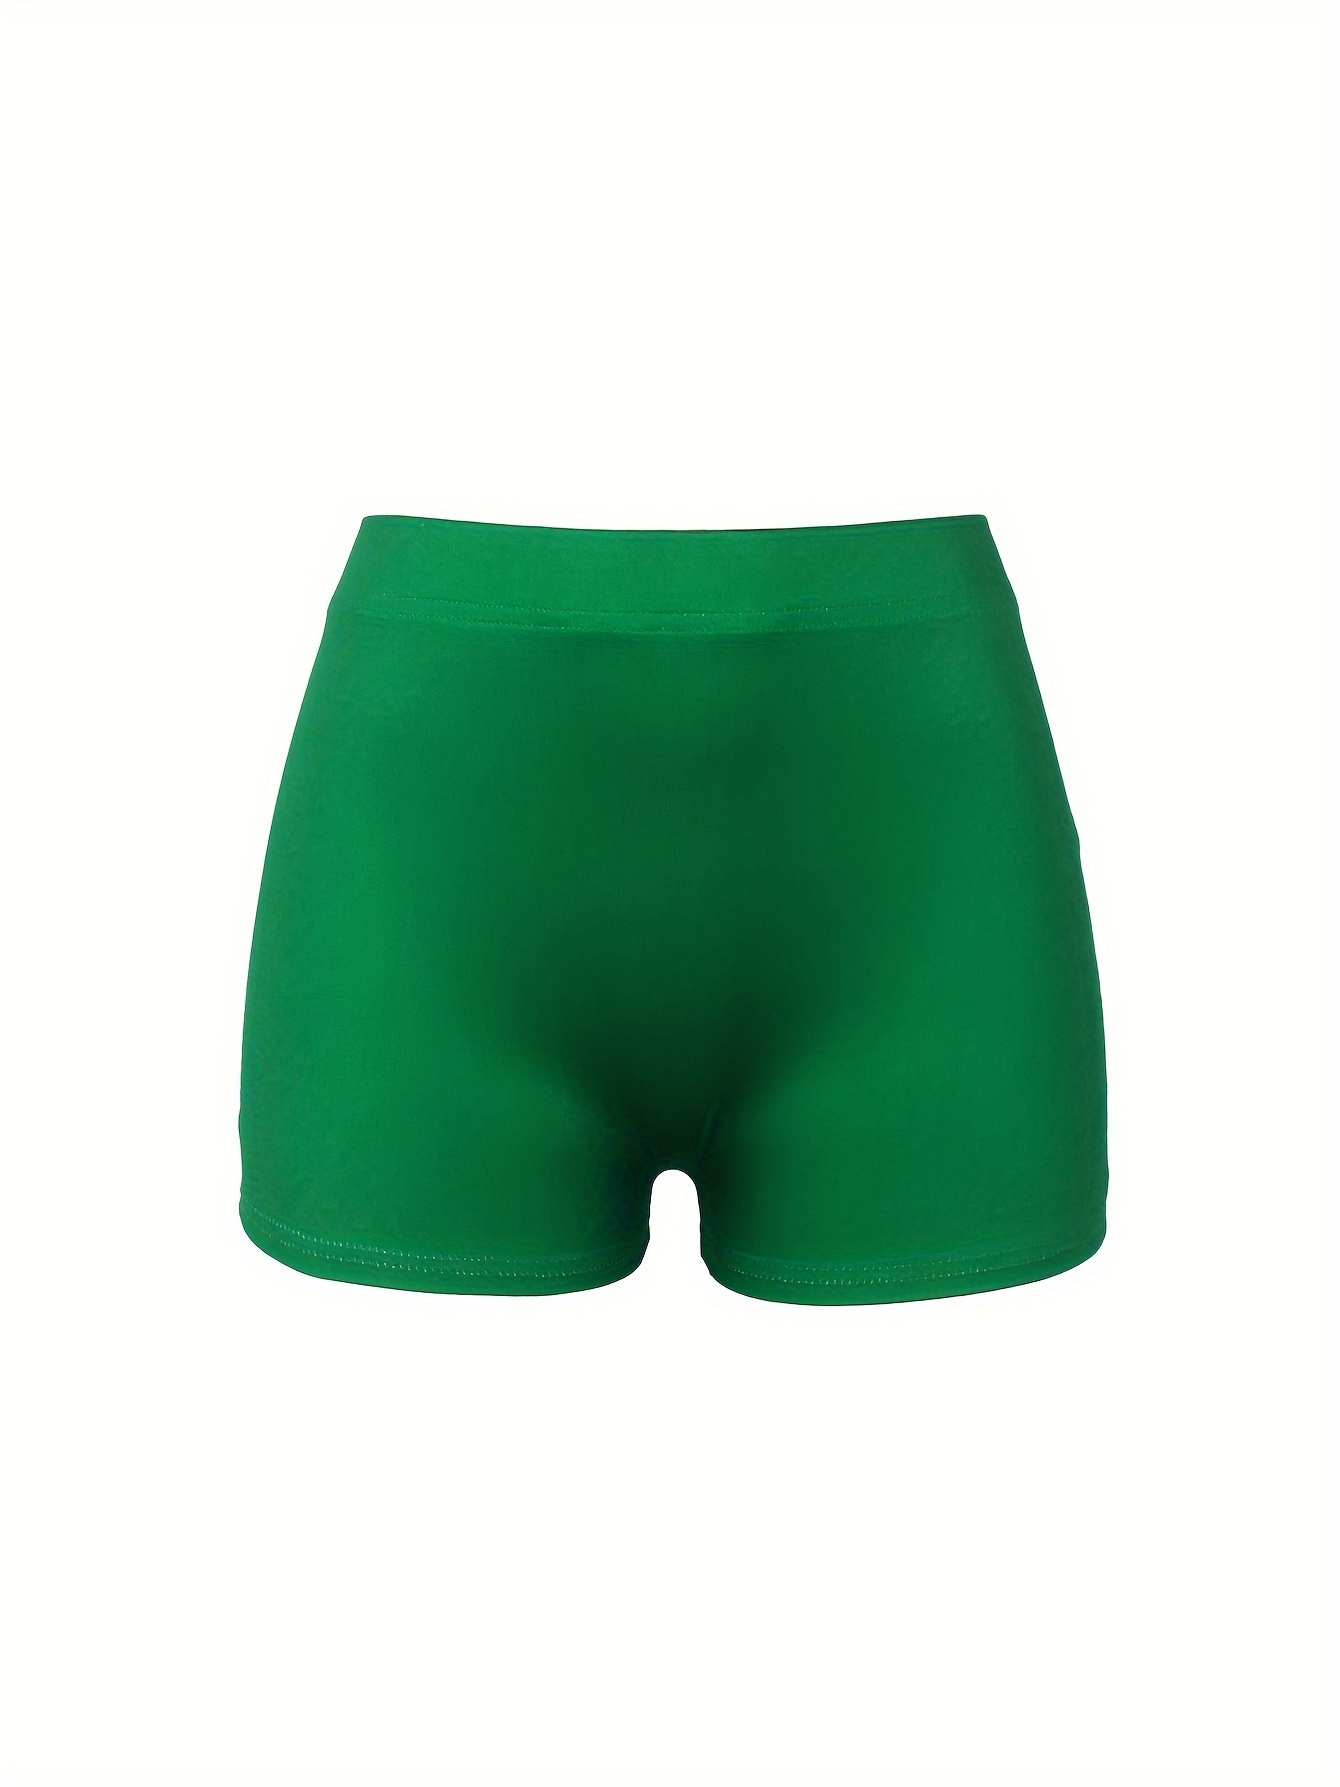 Womens Green Volleyball Shorts.